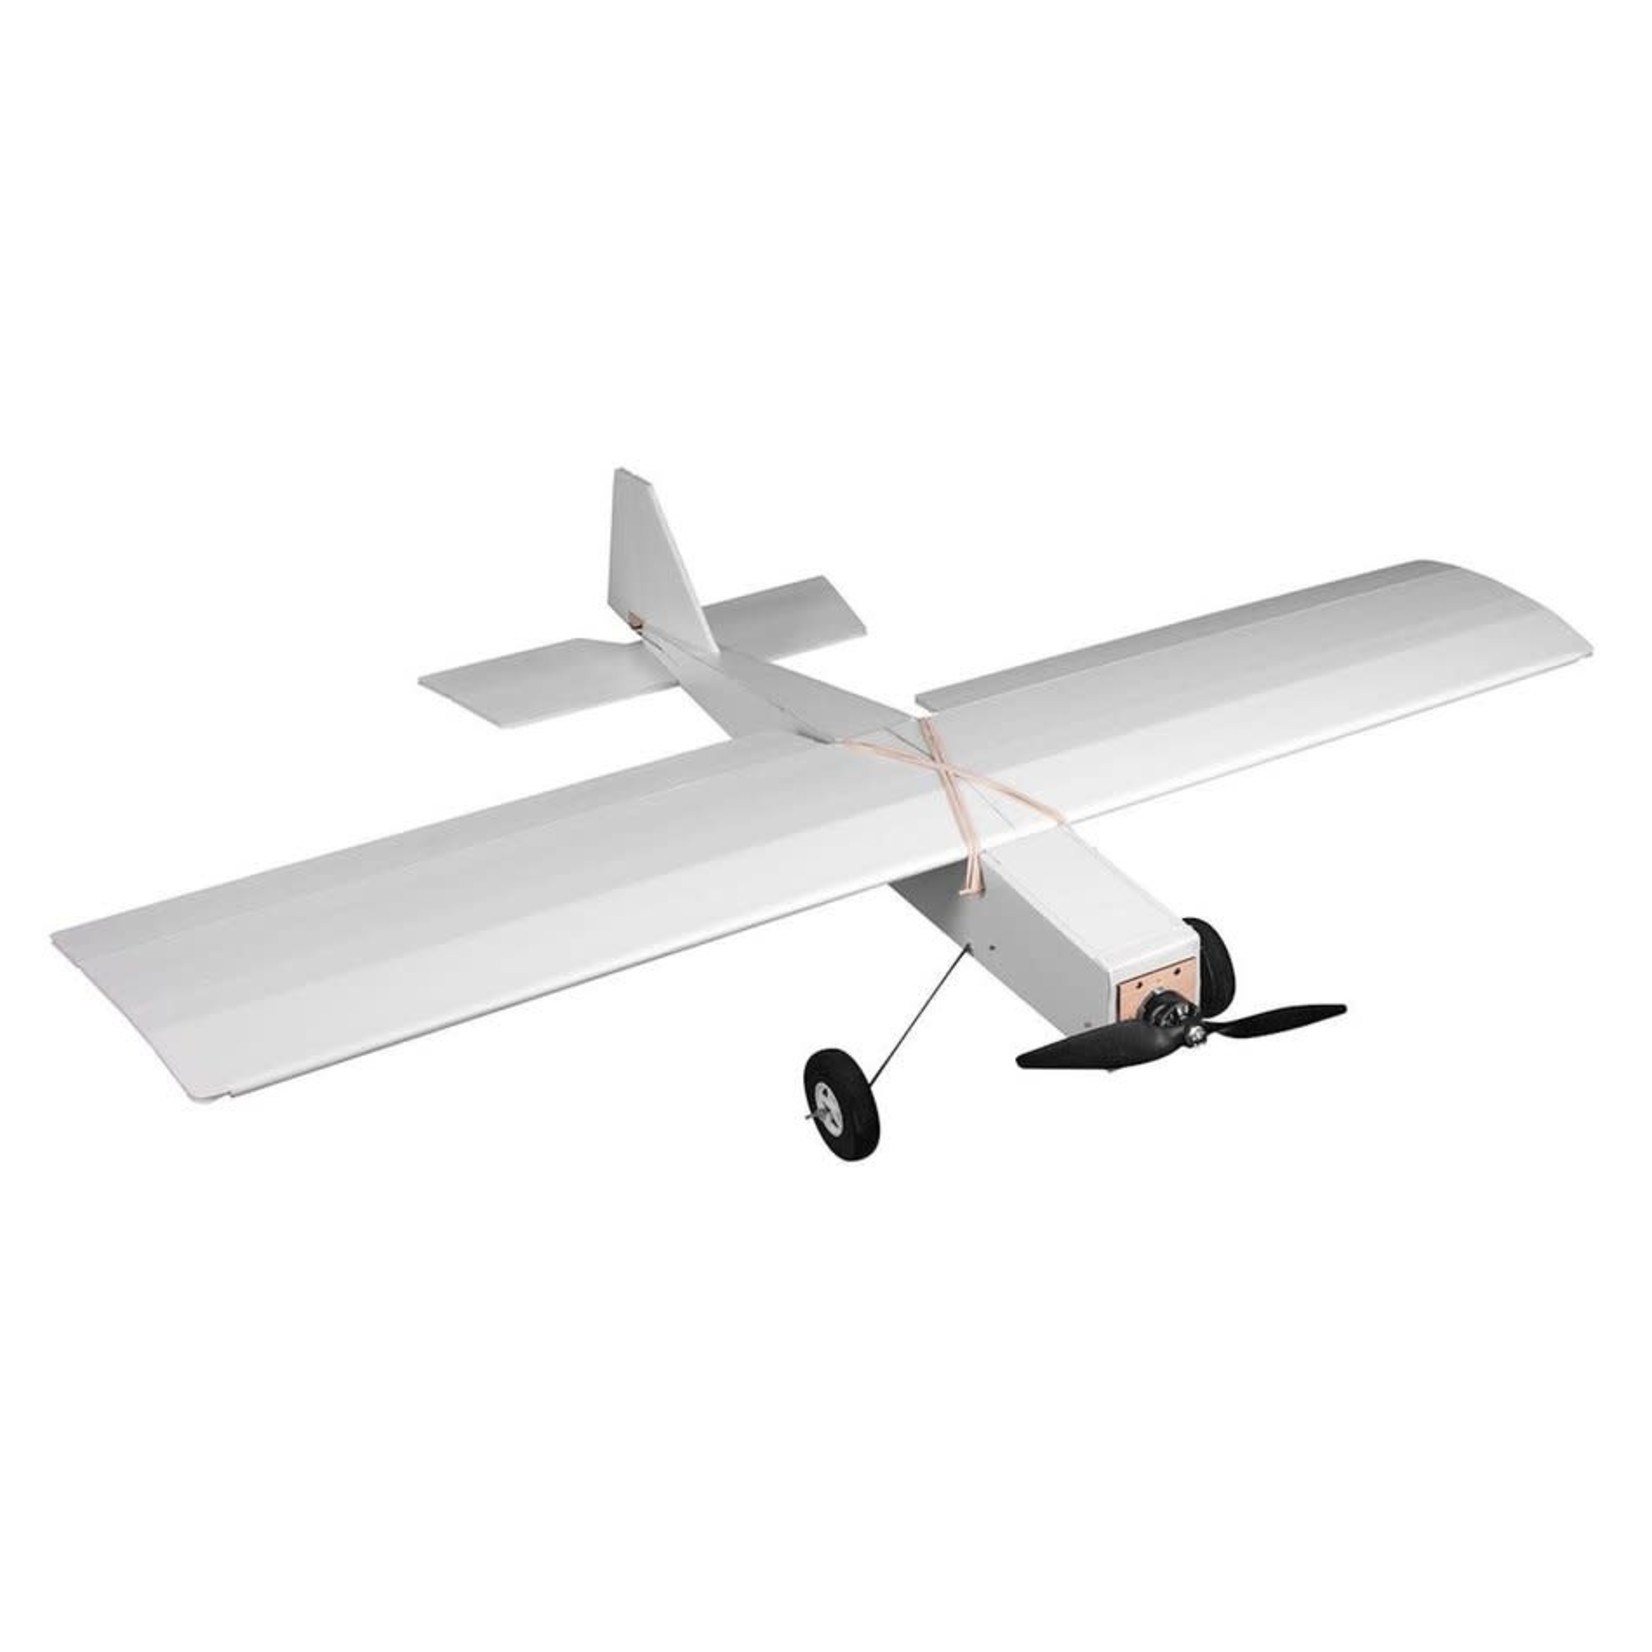 Flite Test Flite Test Simple Stick "Maker Foam" Electric Airplane Kit (1067 mm) #FLT-1075